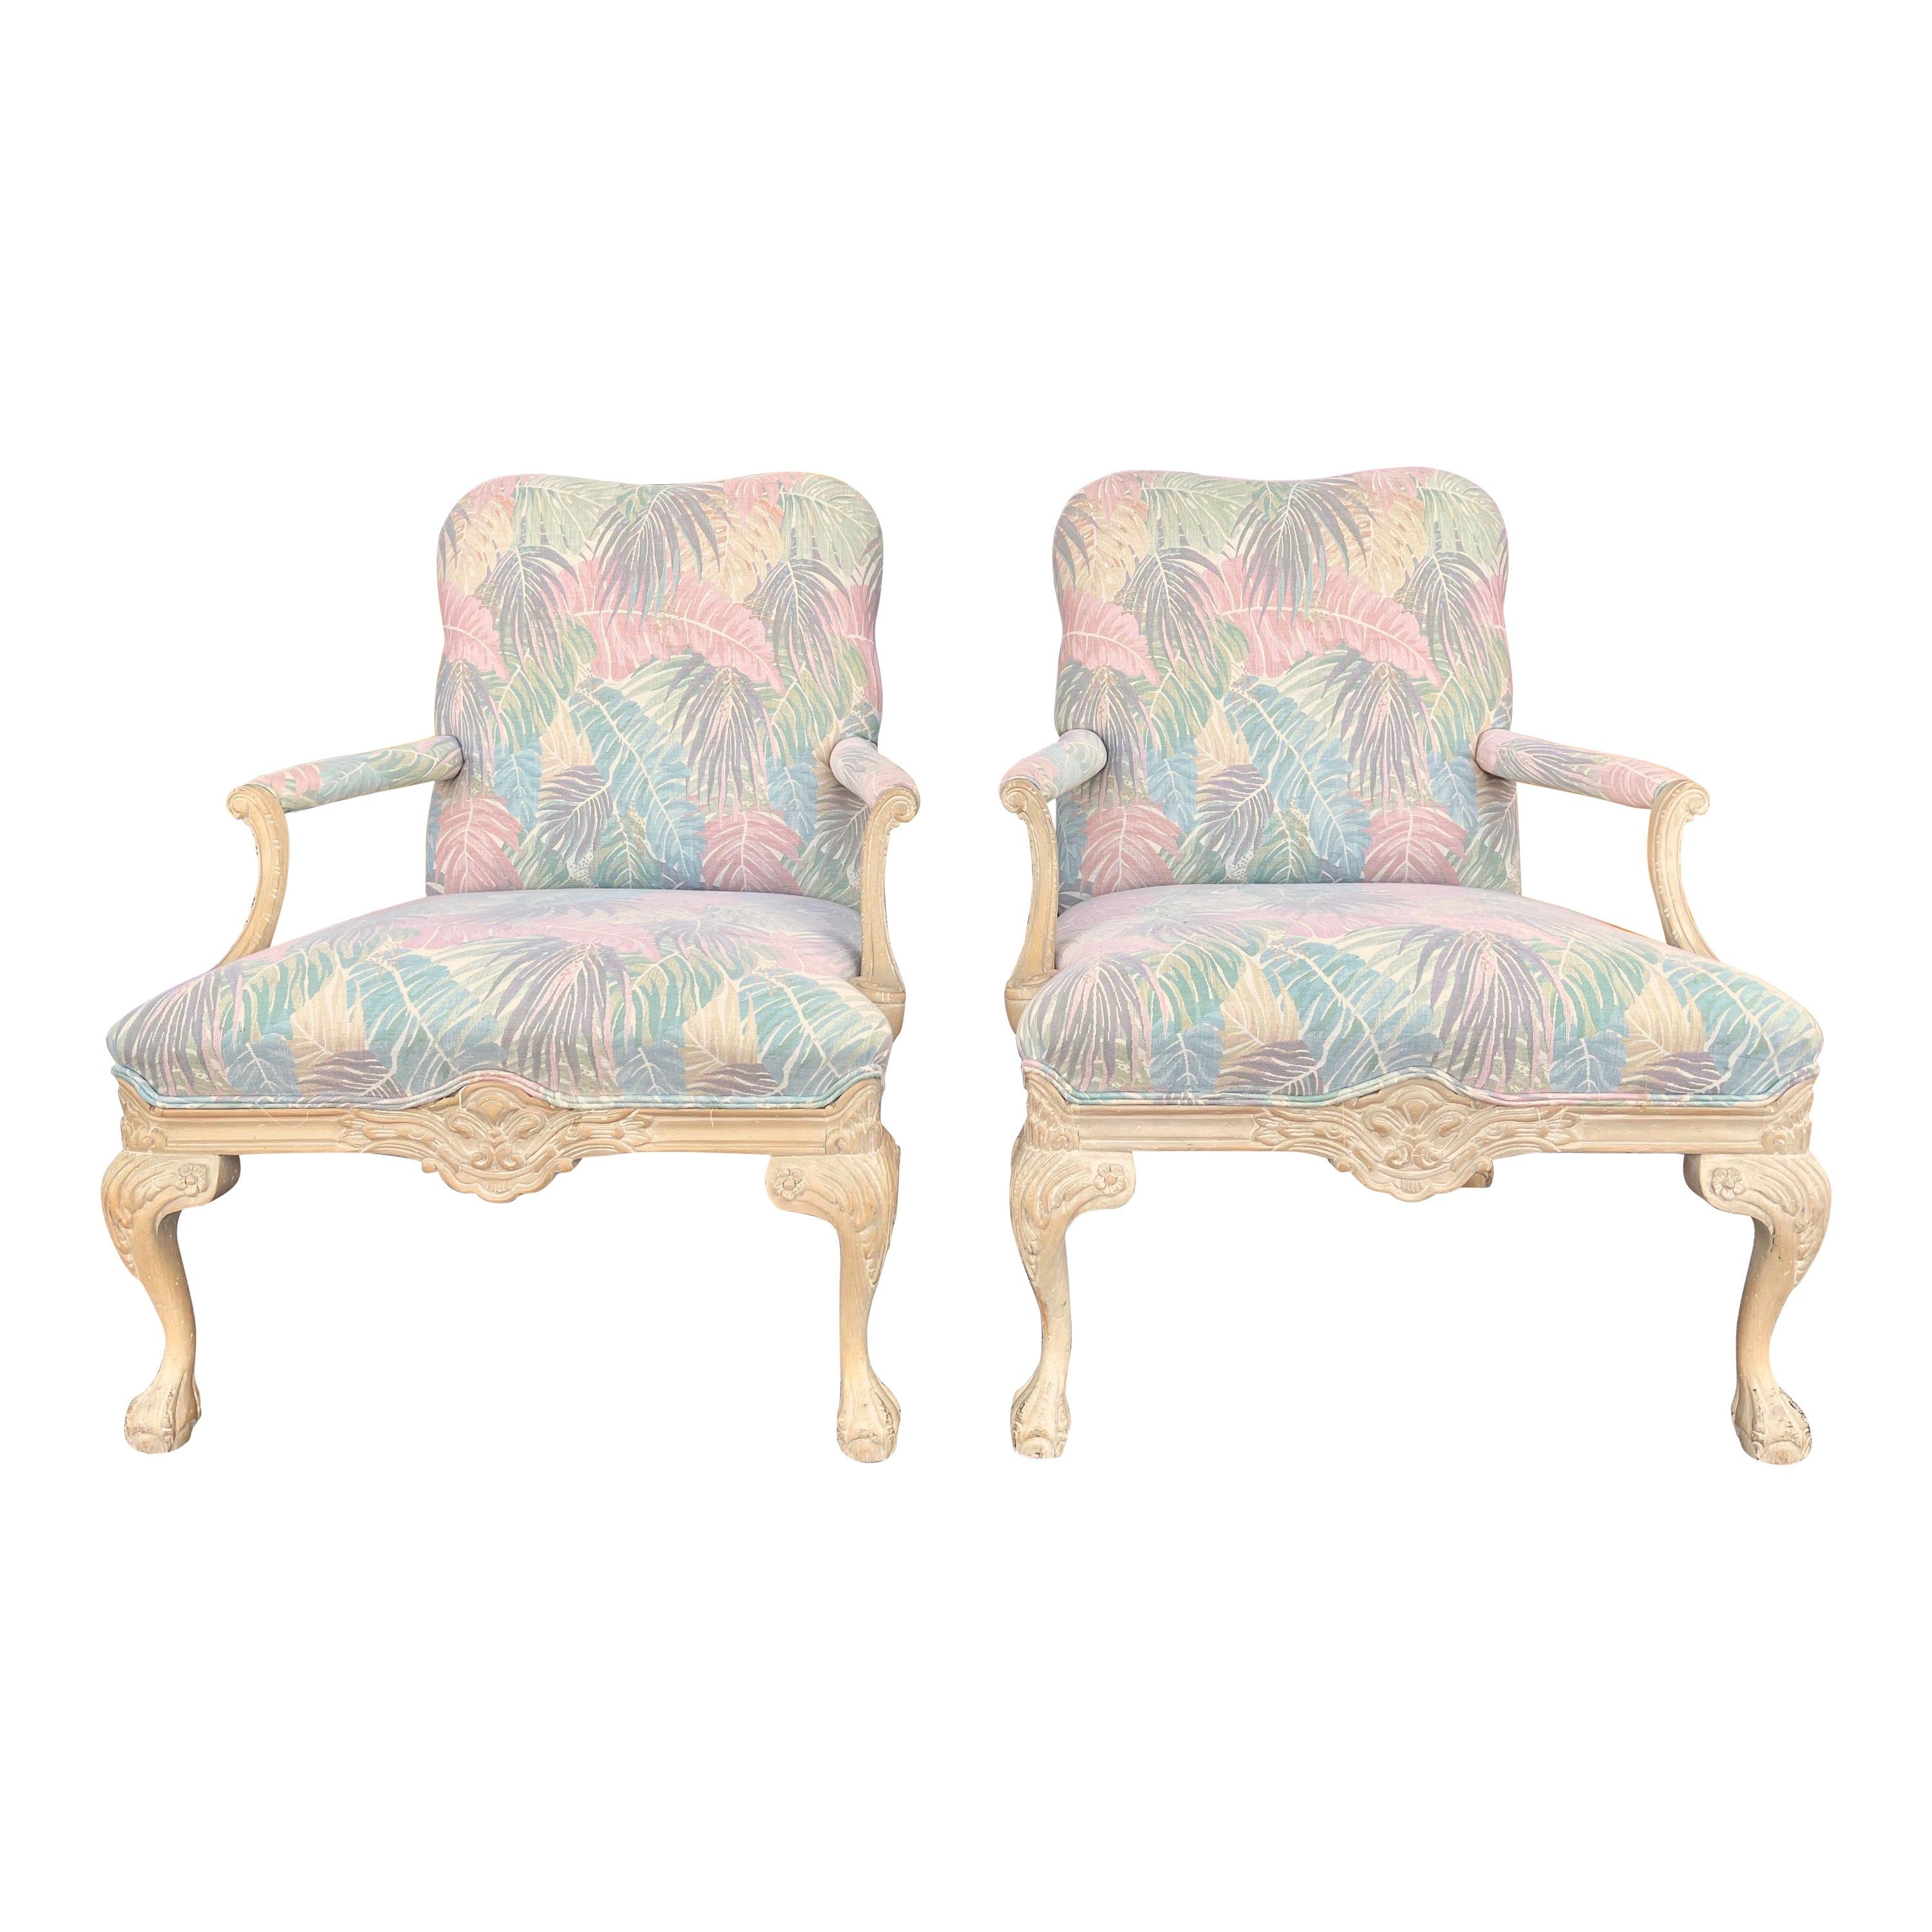 Sherrill Furniture Company Bergere Chairs